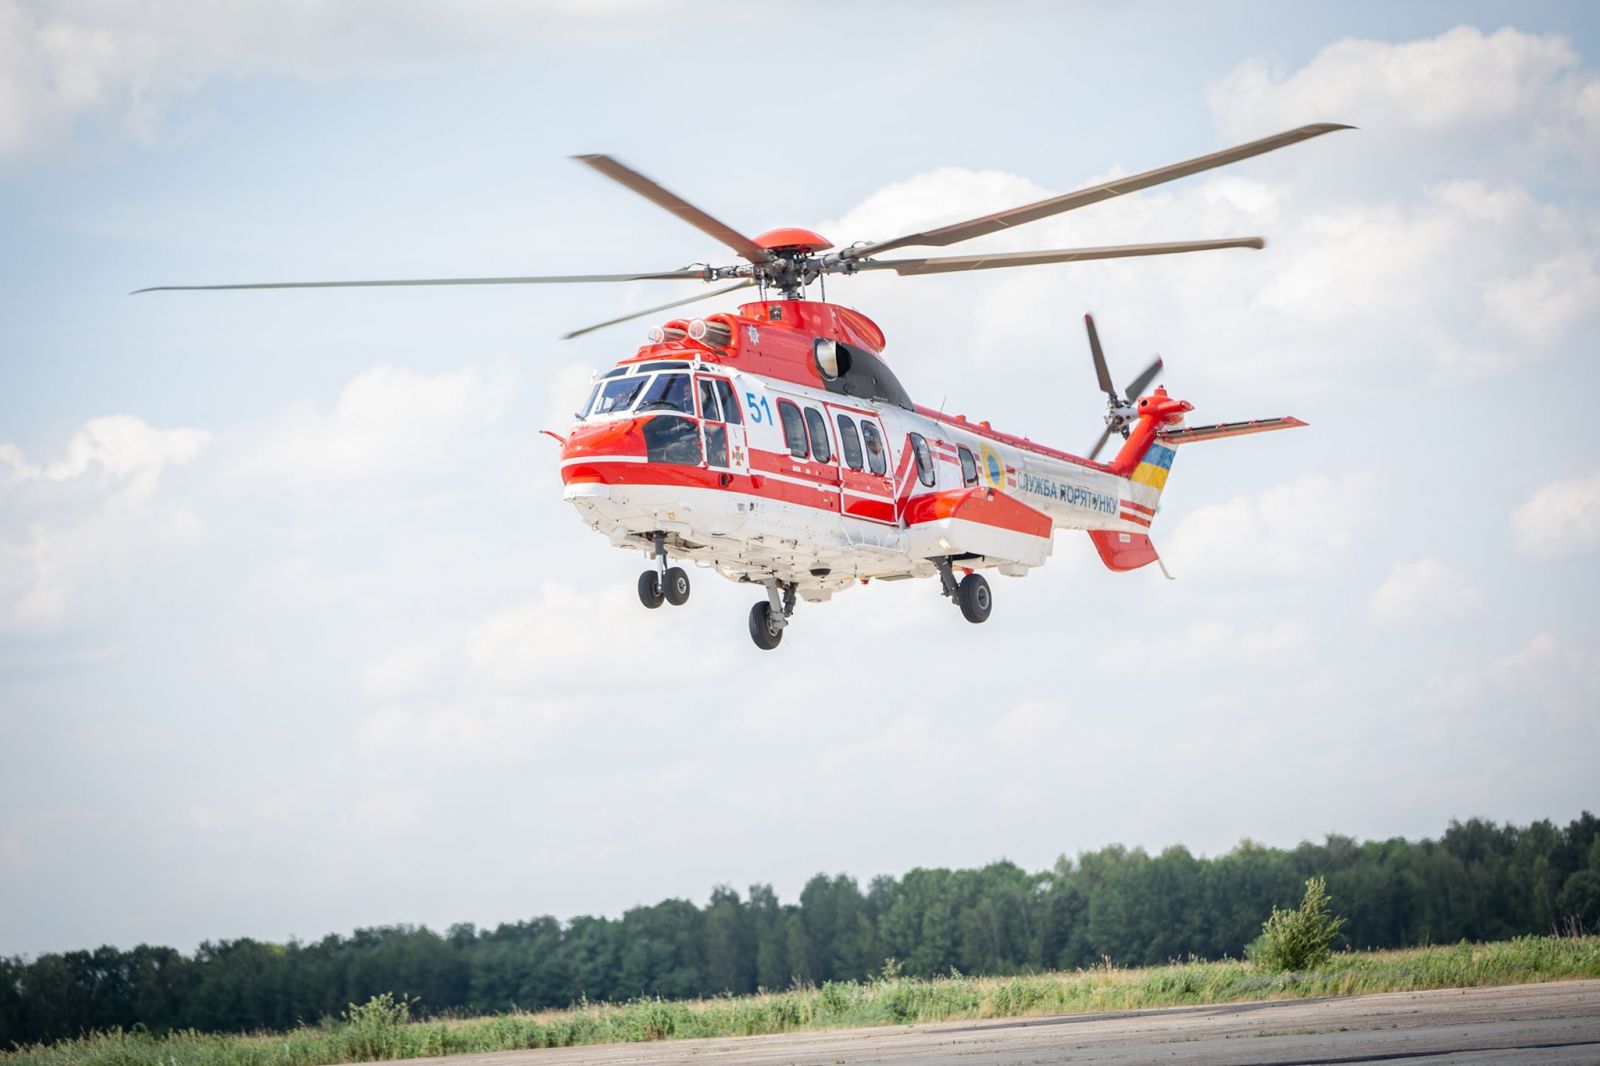 Новости техники: МВД получило из Франции вертолет Super Puma, фото — ГСЧС